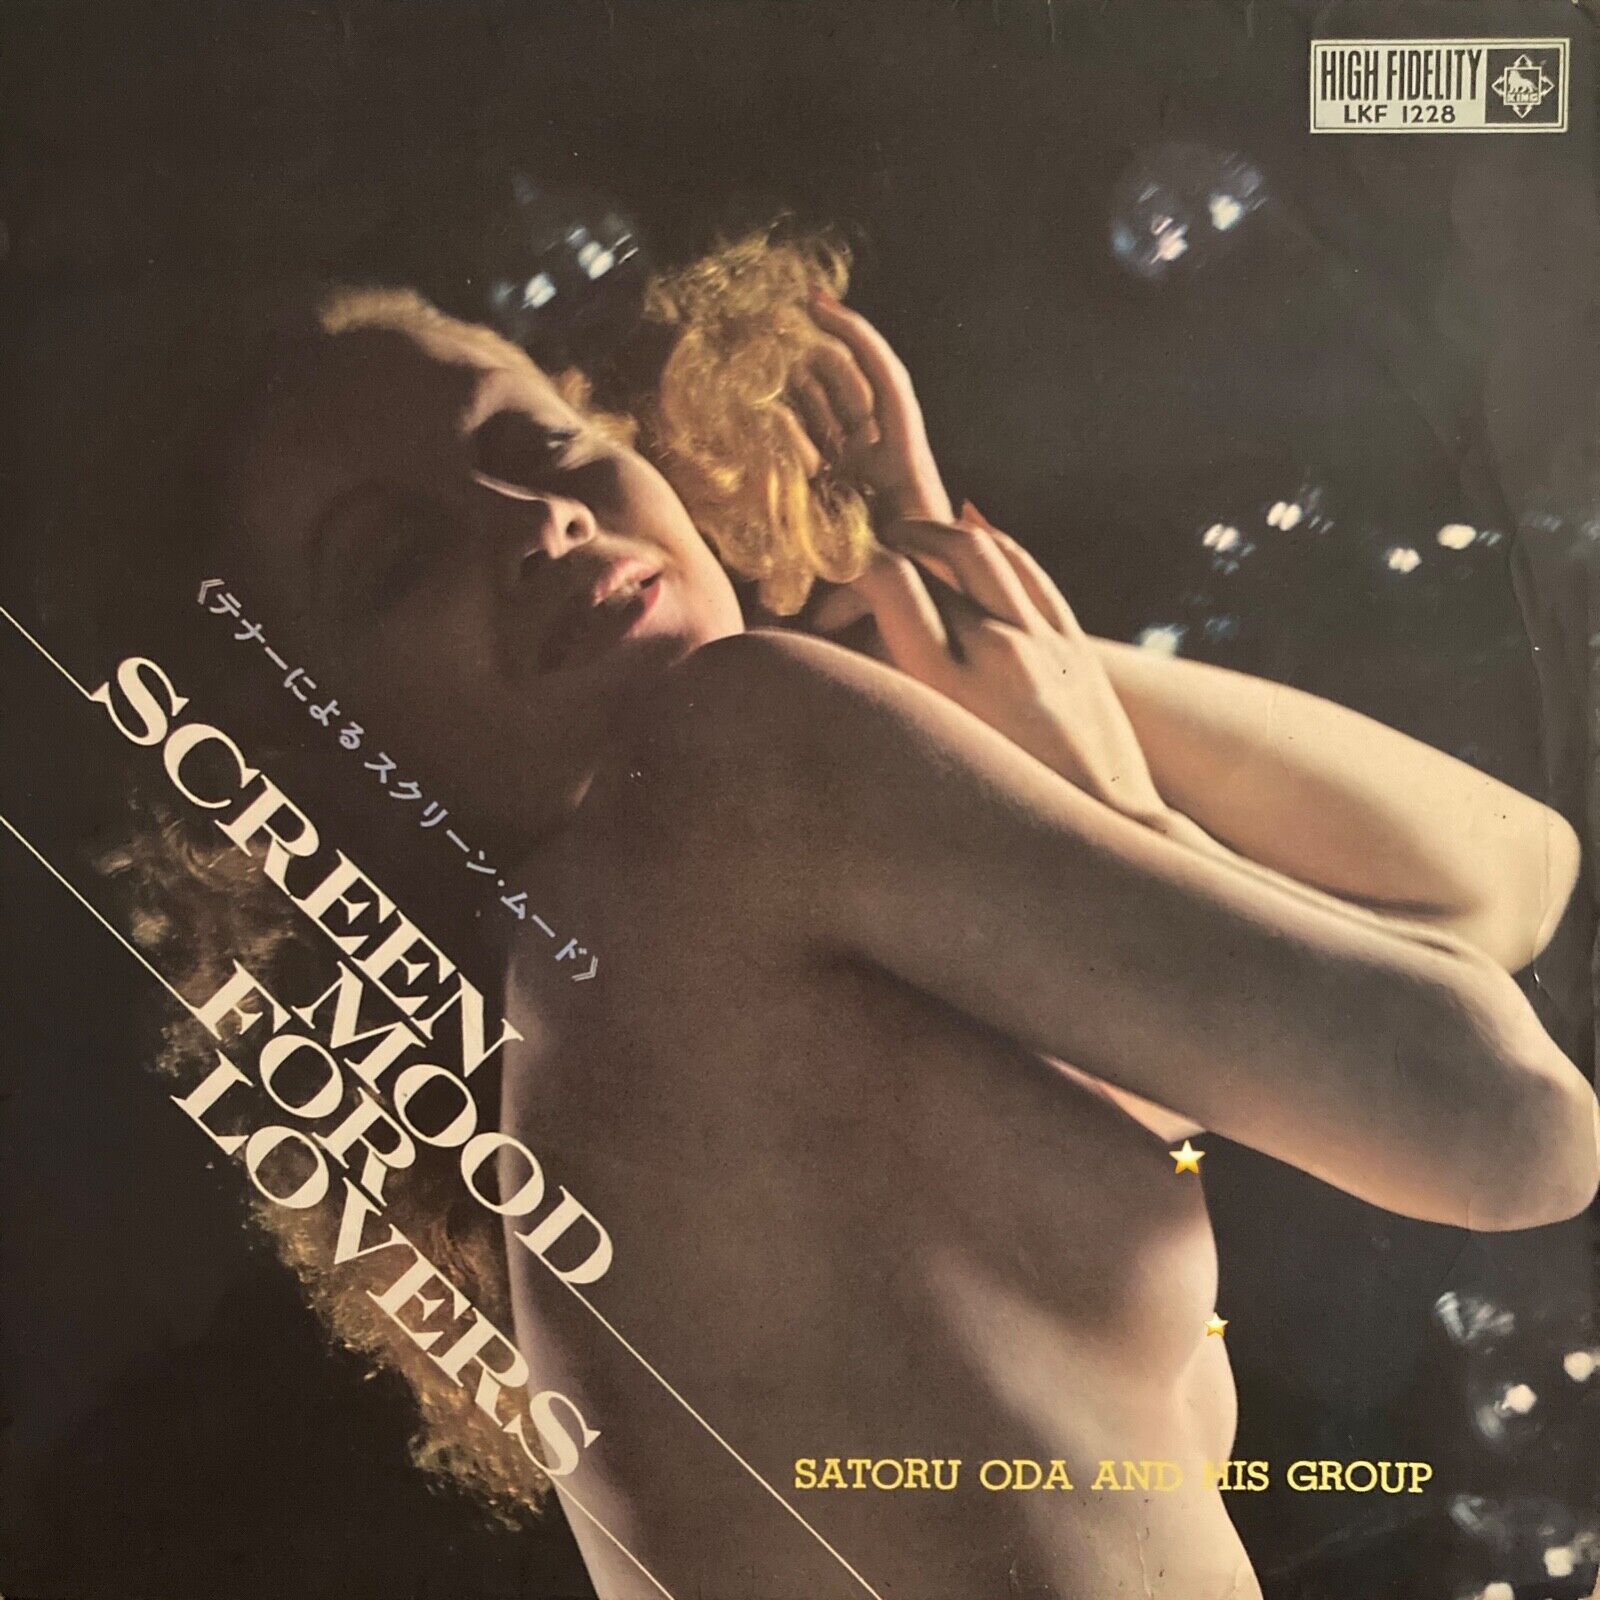 SEXY COVER CHEESECAKE SATORU ODA SCREEN MOOD FOR LOVERS LP 1962 LKF 1228 VINYL